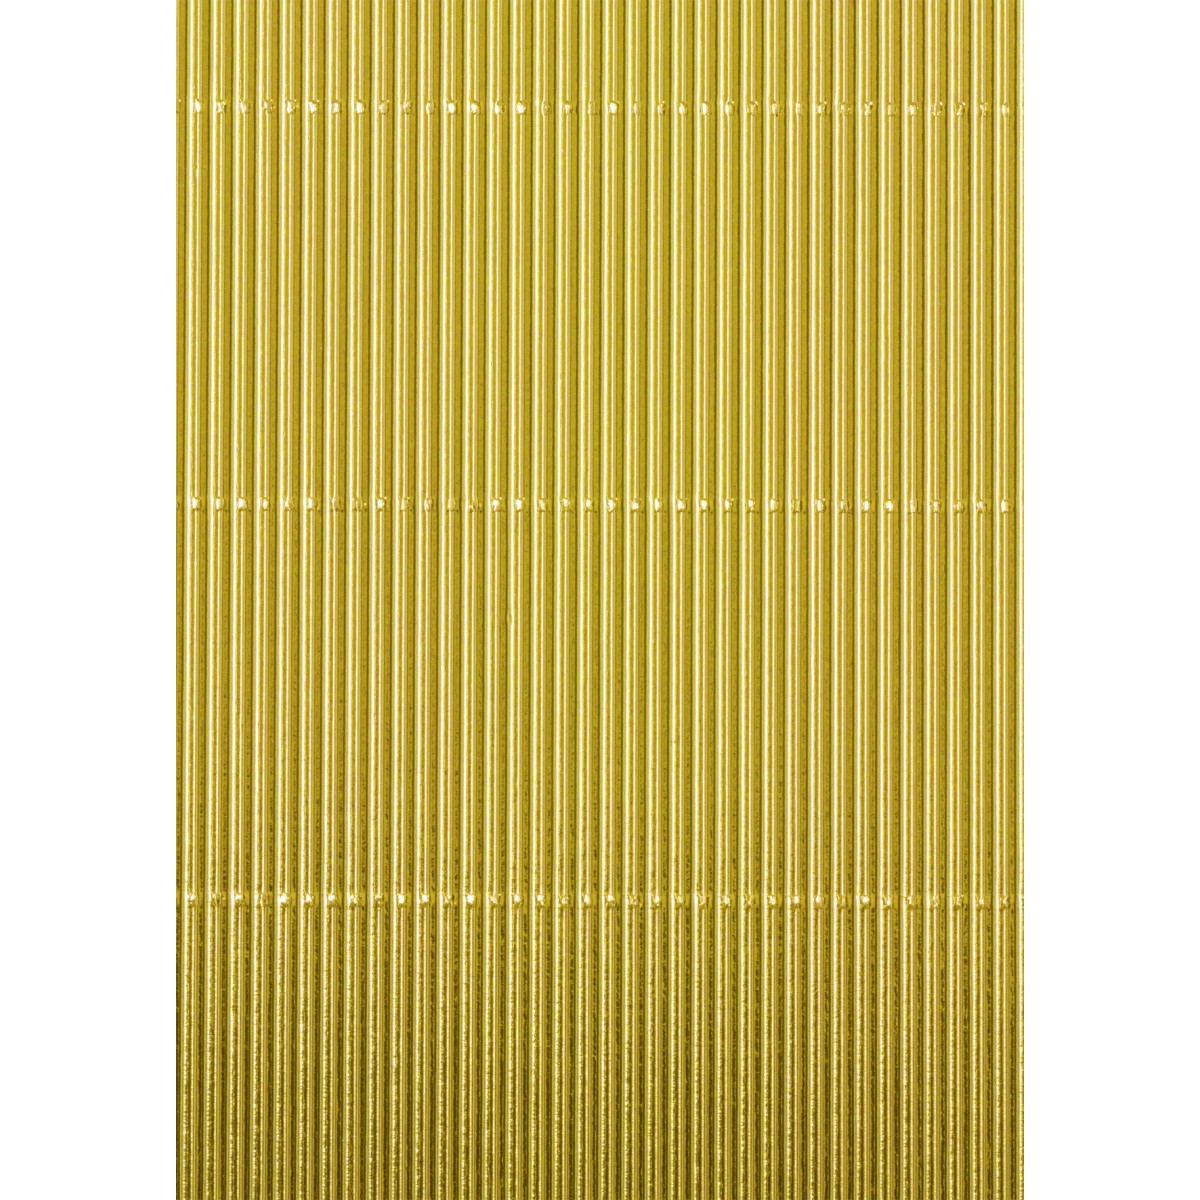 Bastelwellkarton 50 x 70 cm goldfarben metallic